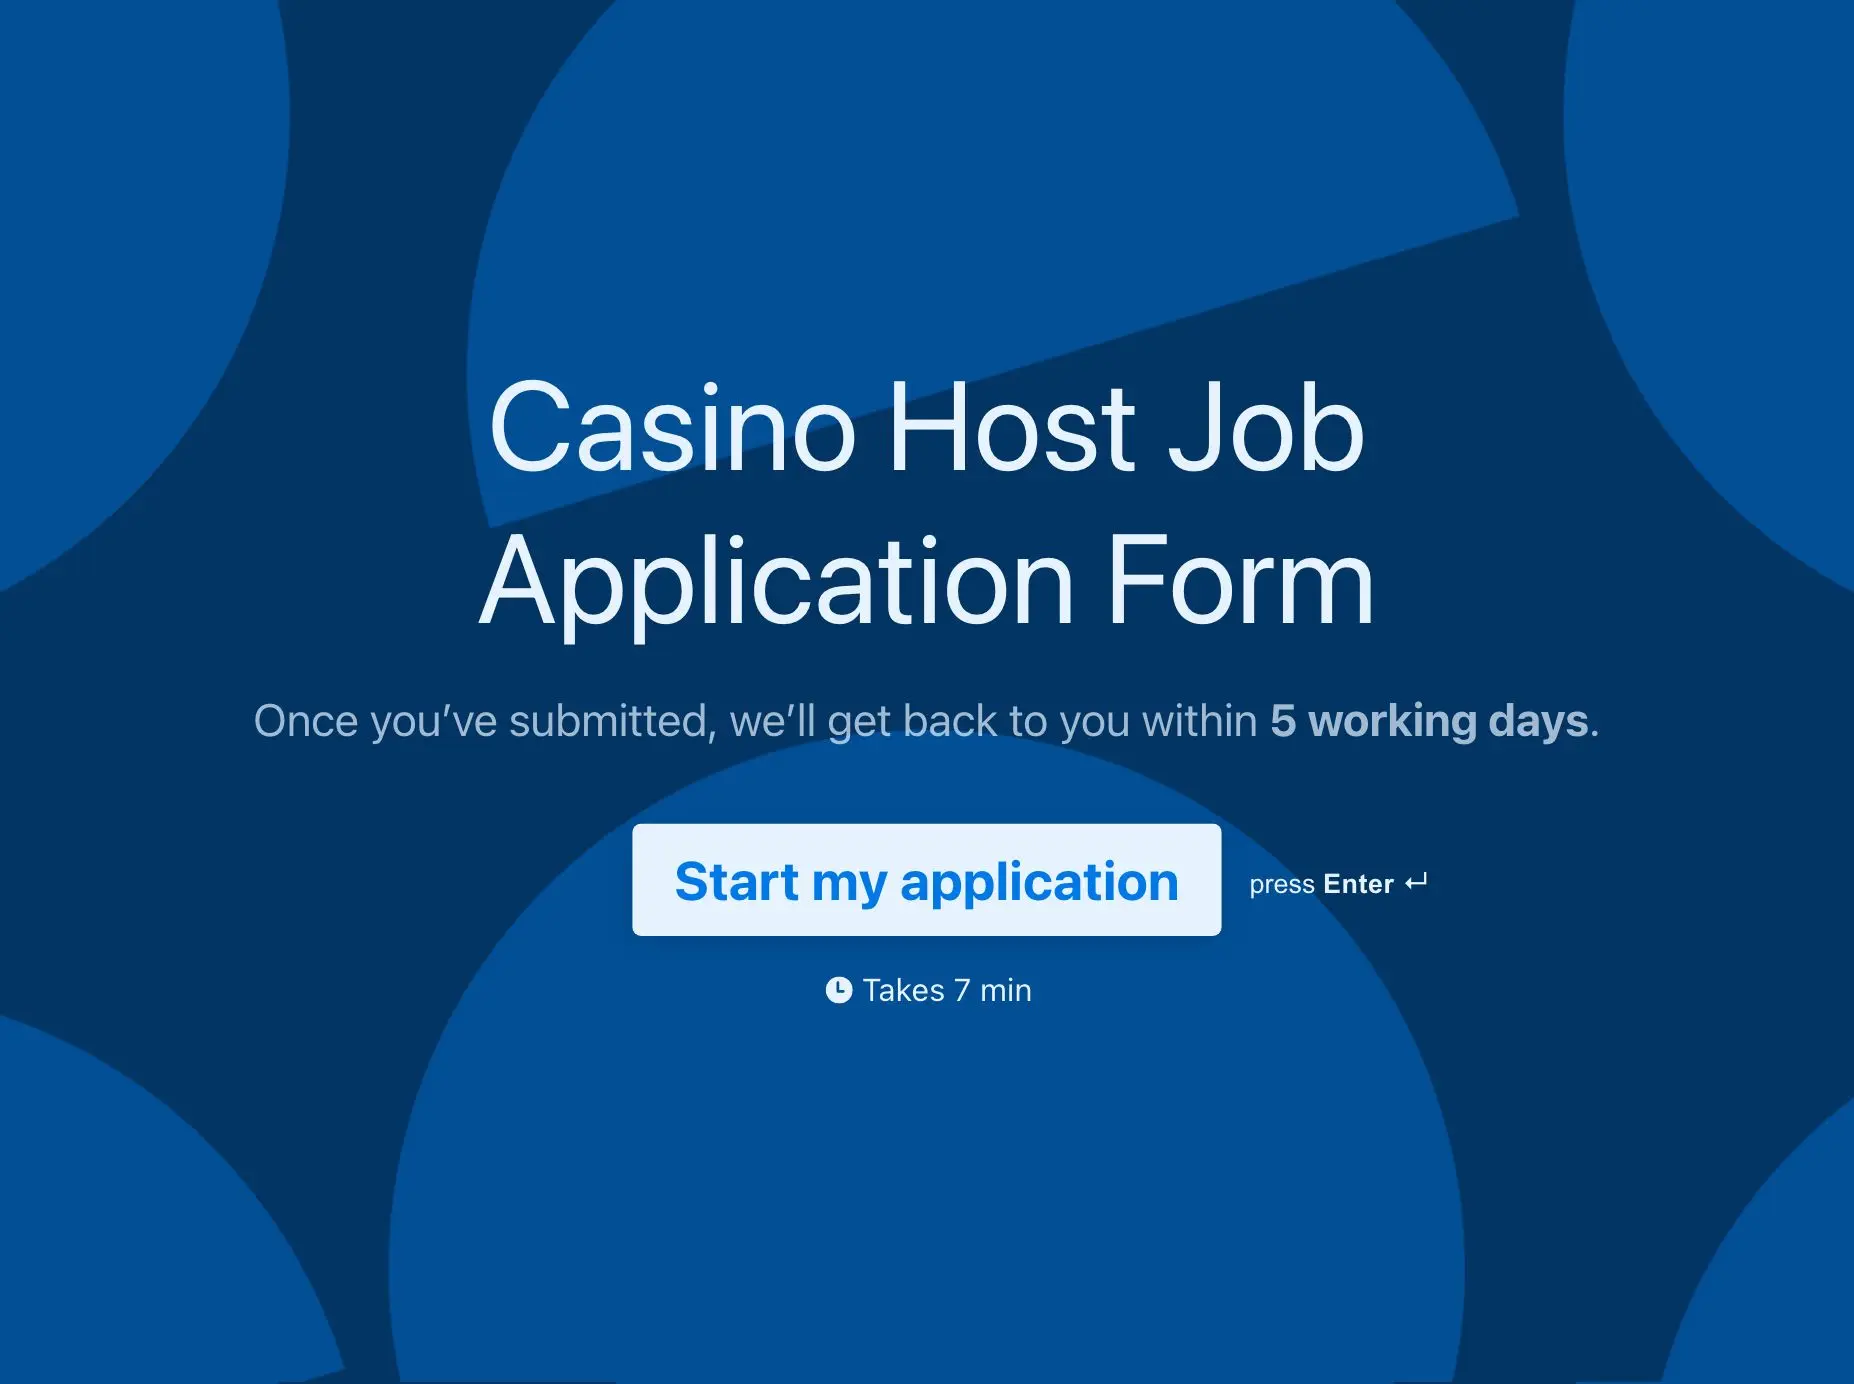 Casino Host Job Application Form Template Hero